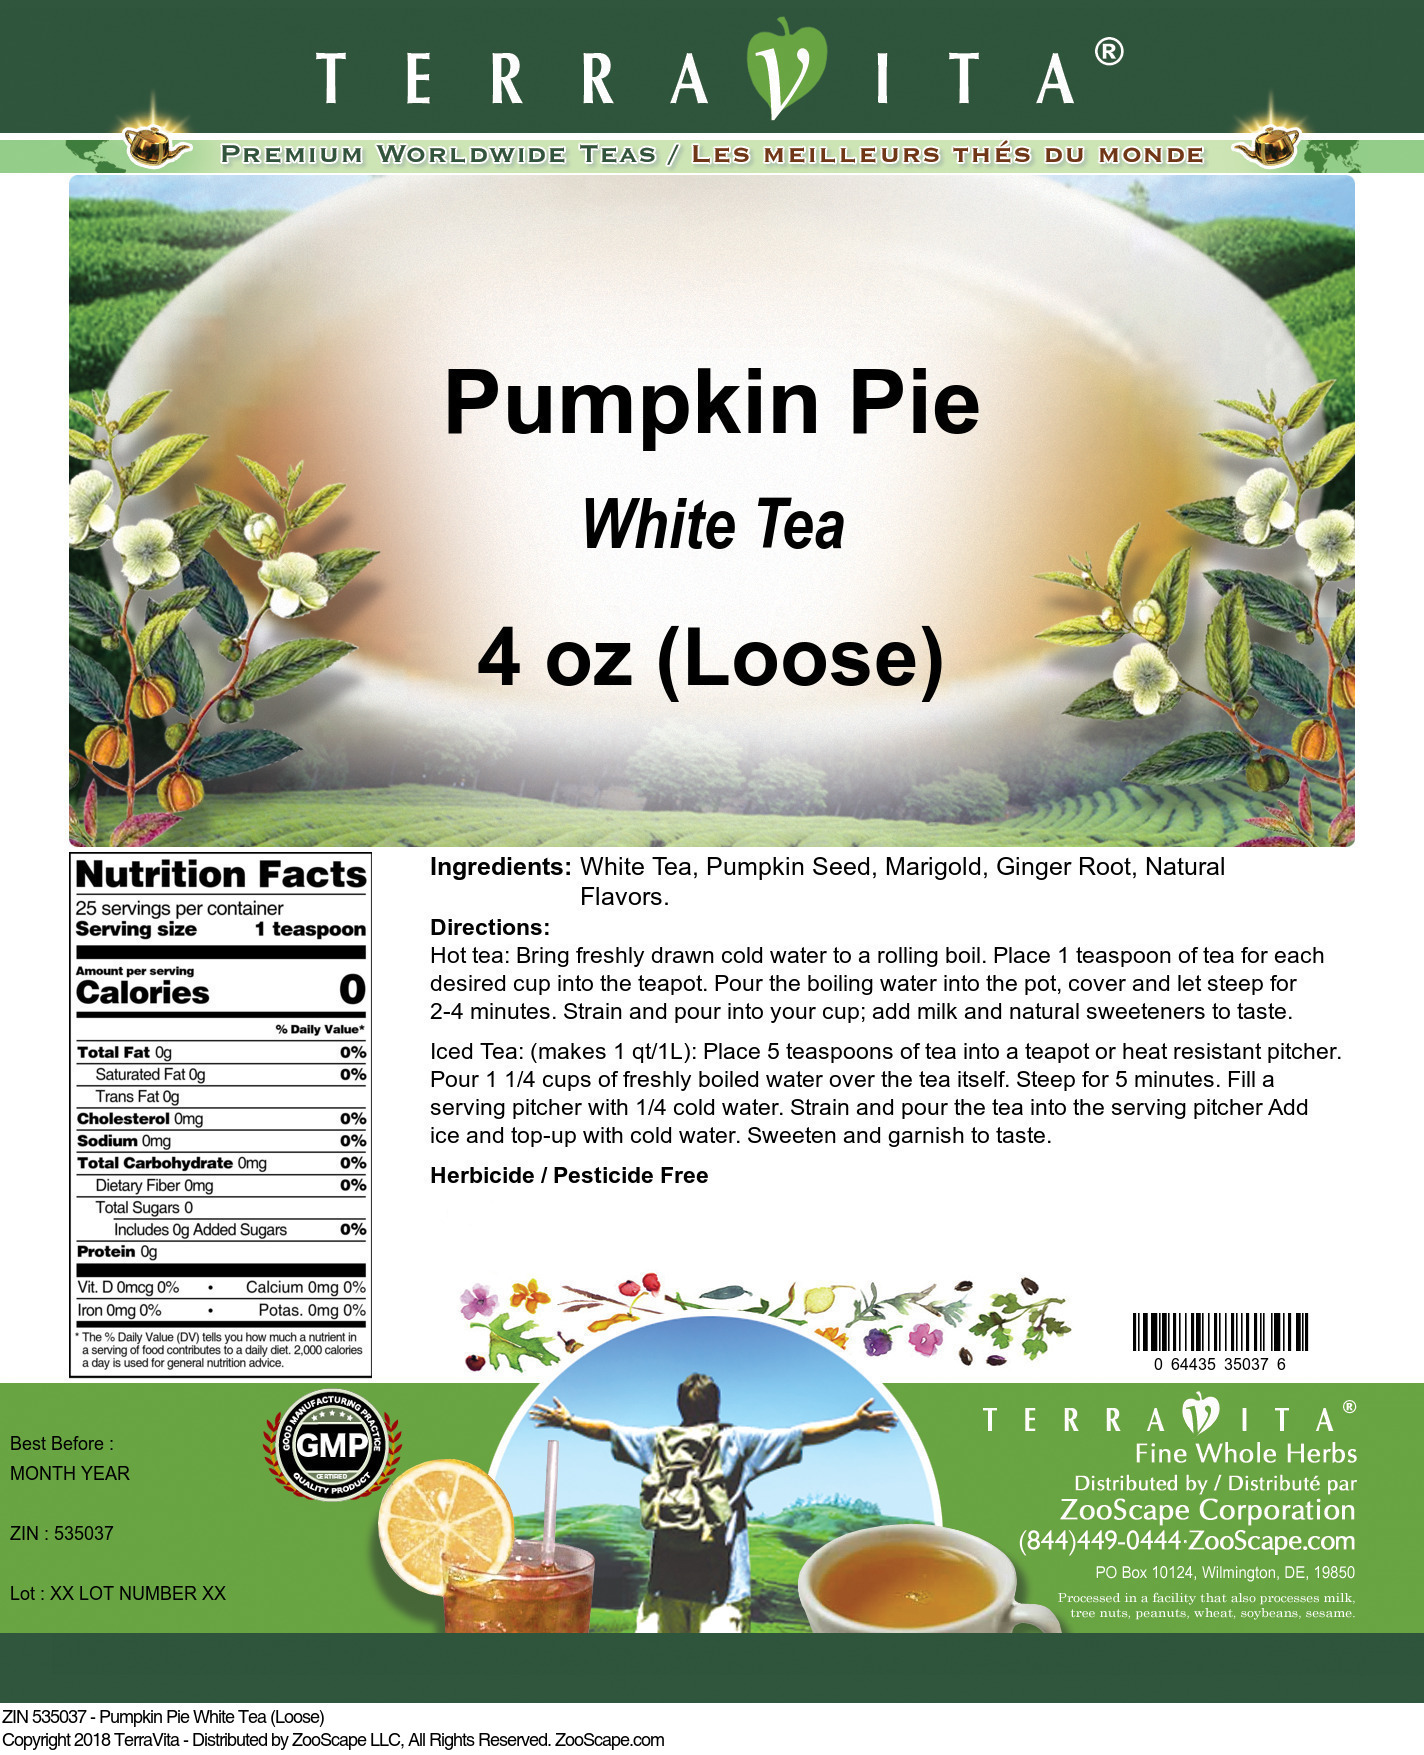 Pumpkin Pie White Tea (Loose) - Label